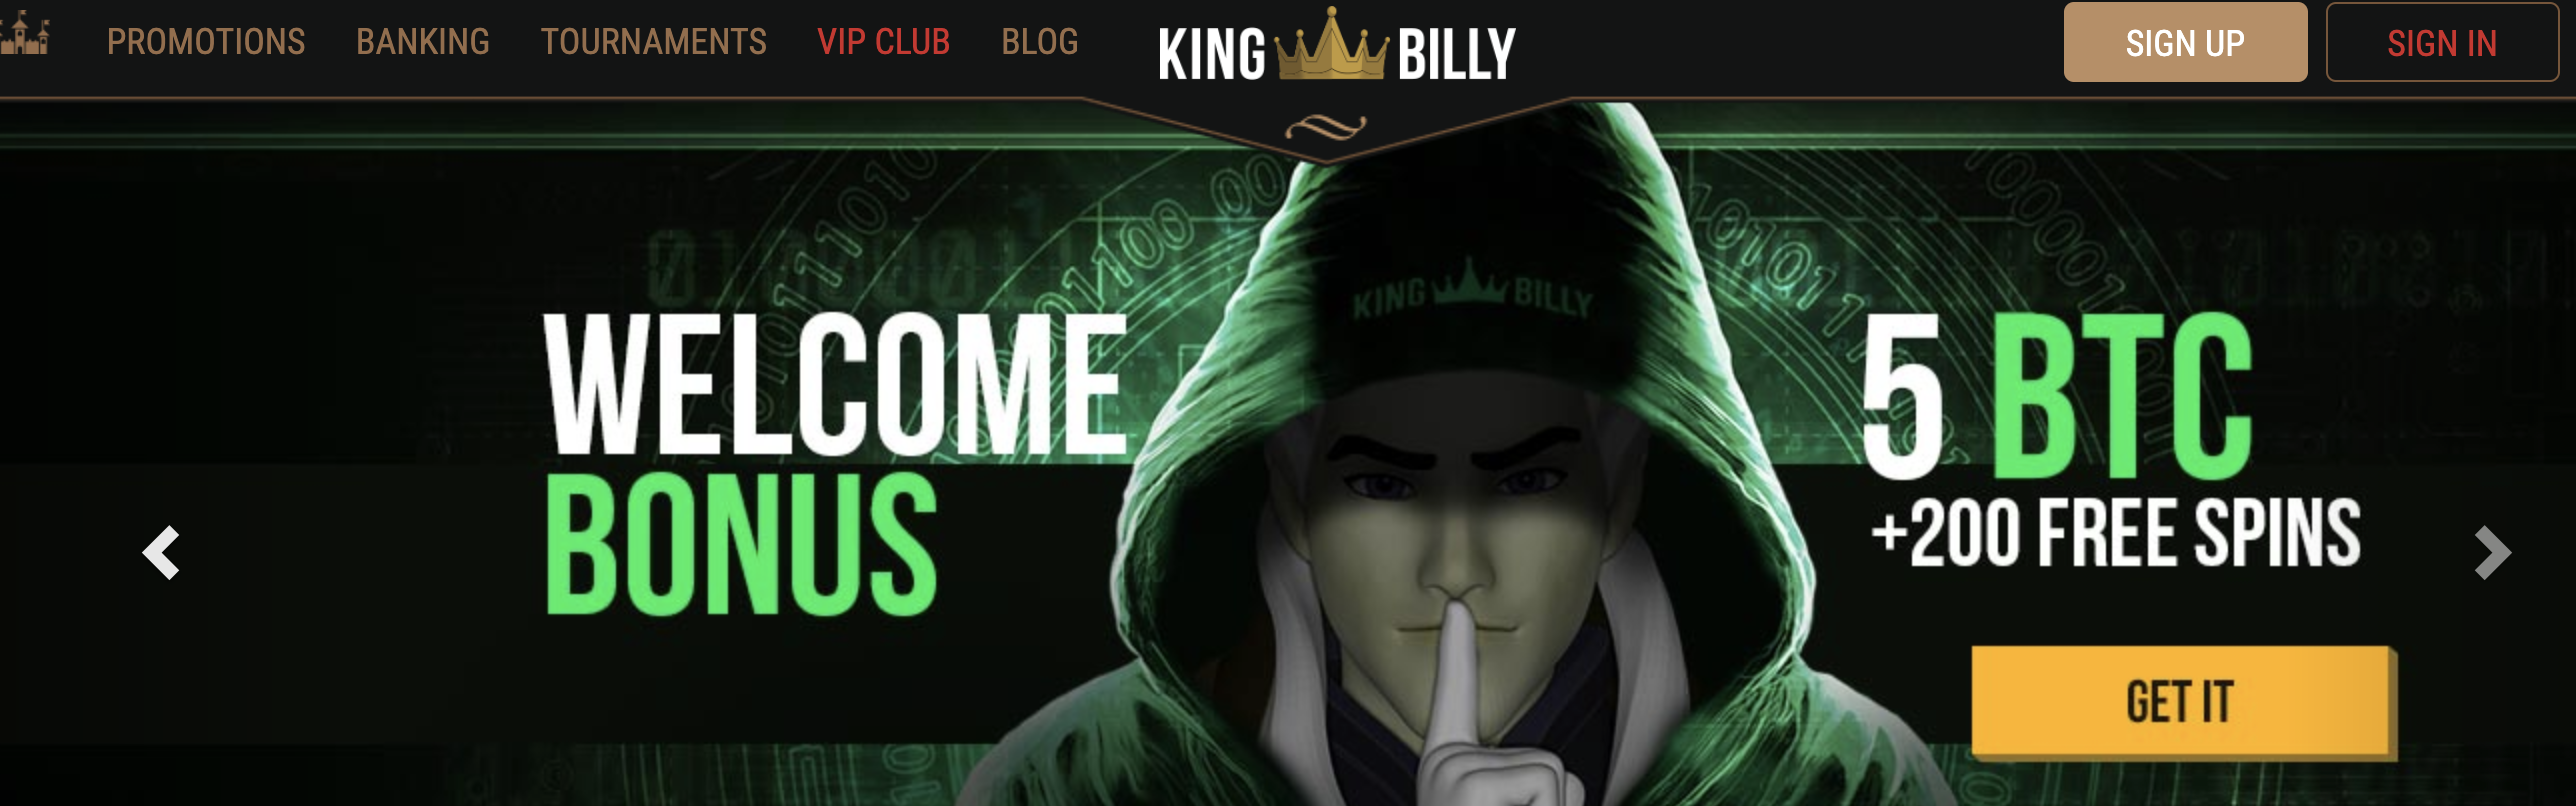 King Billy Bitcoin Bonus